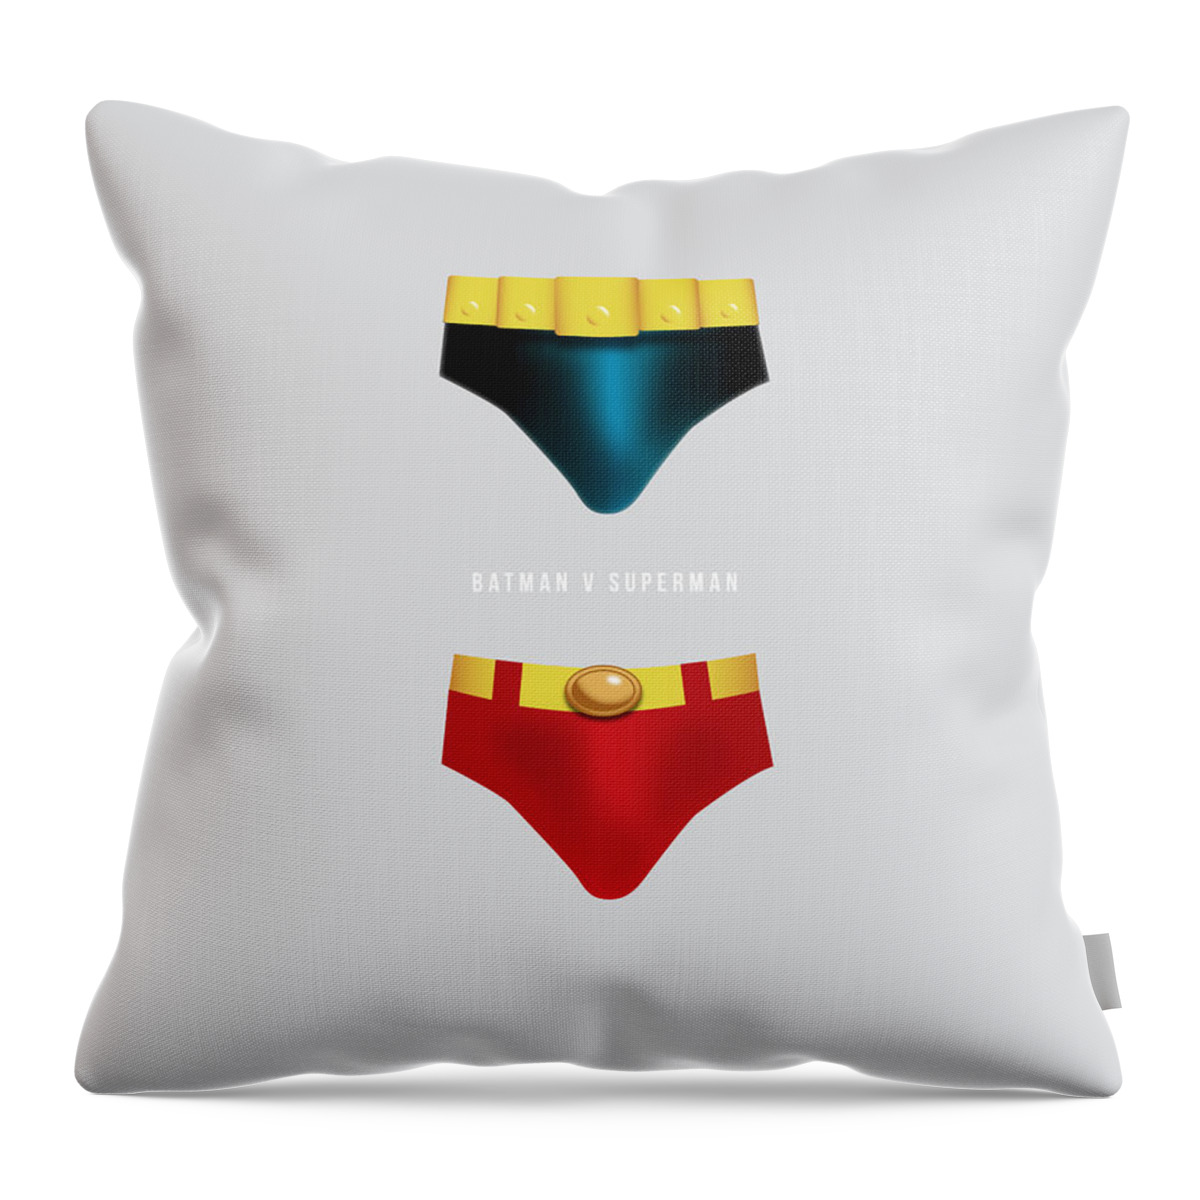 Batman V Superman Throw Pillow featuring the digital art Batman v Superman - Alternative Movie Poster by Movie Poster Boy